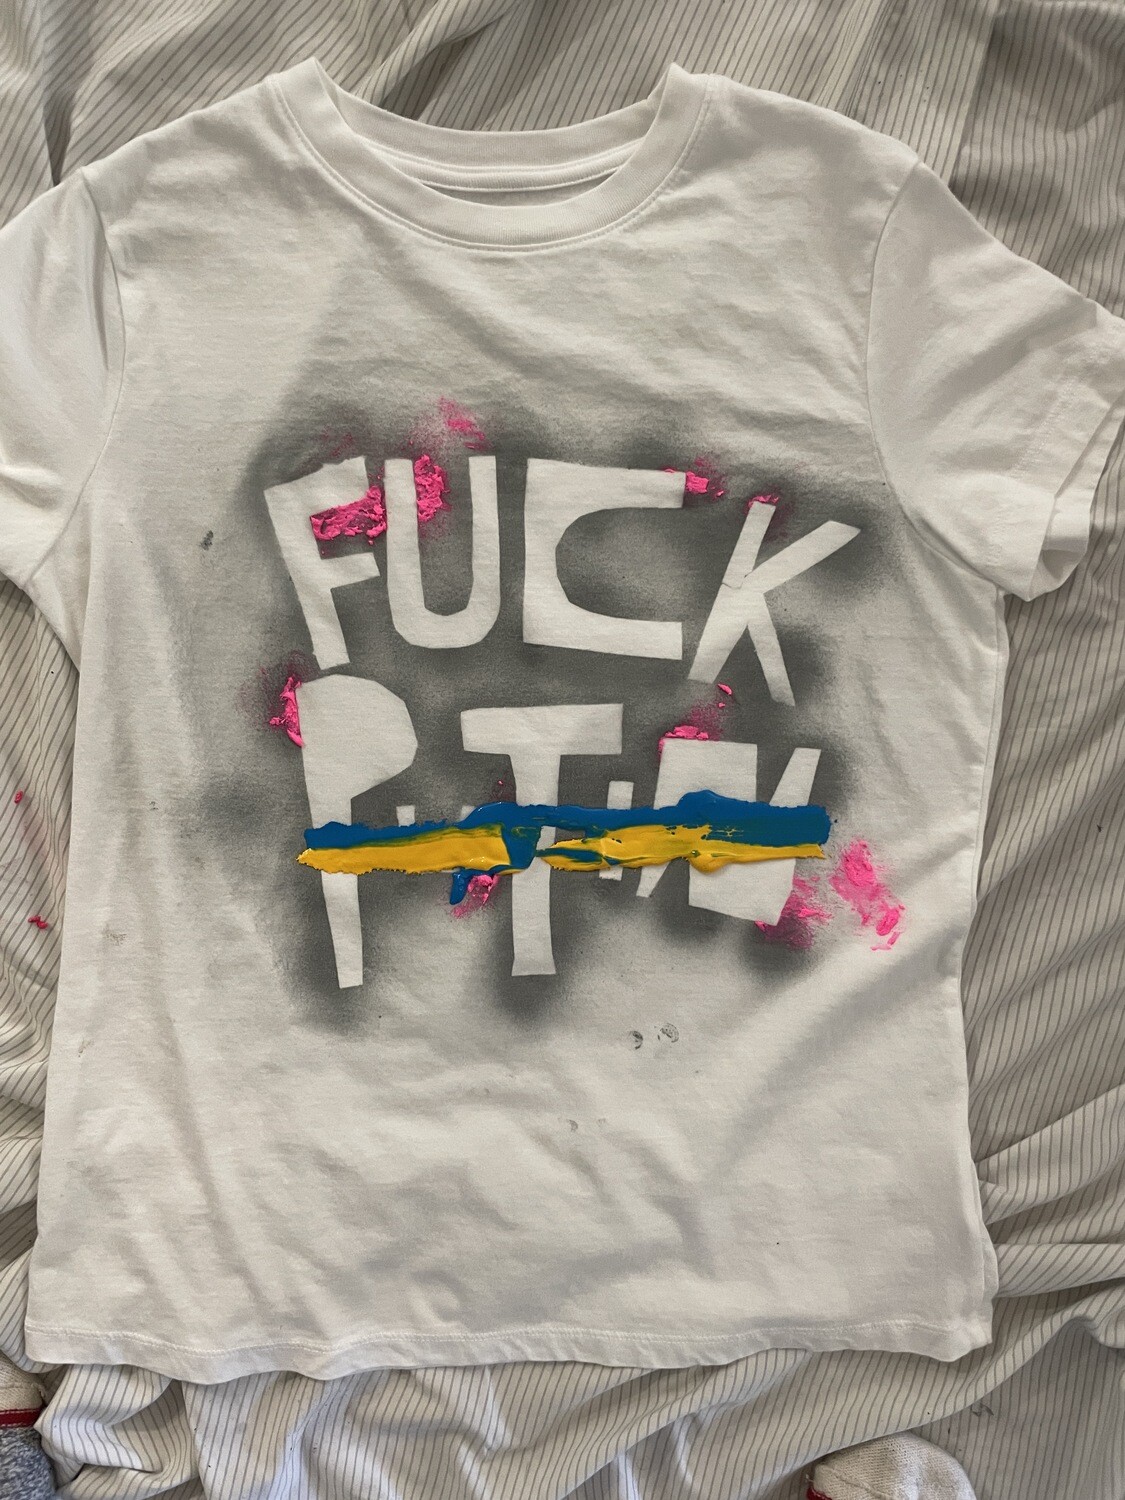 F#ck Pootie - Support Ukraine - NFC clothing